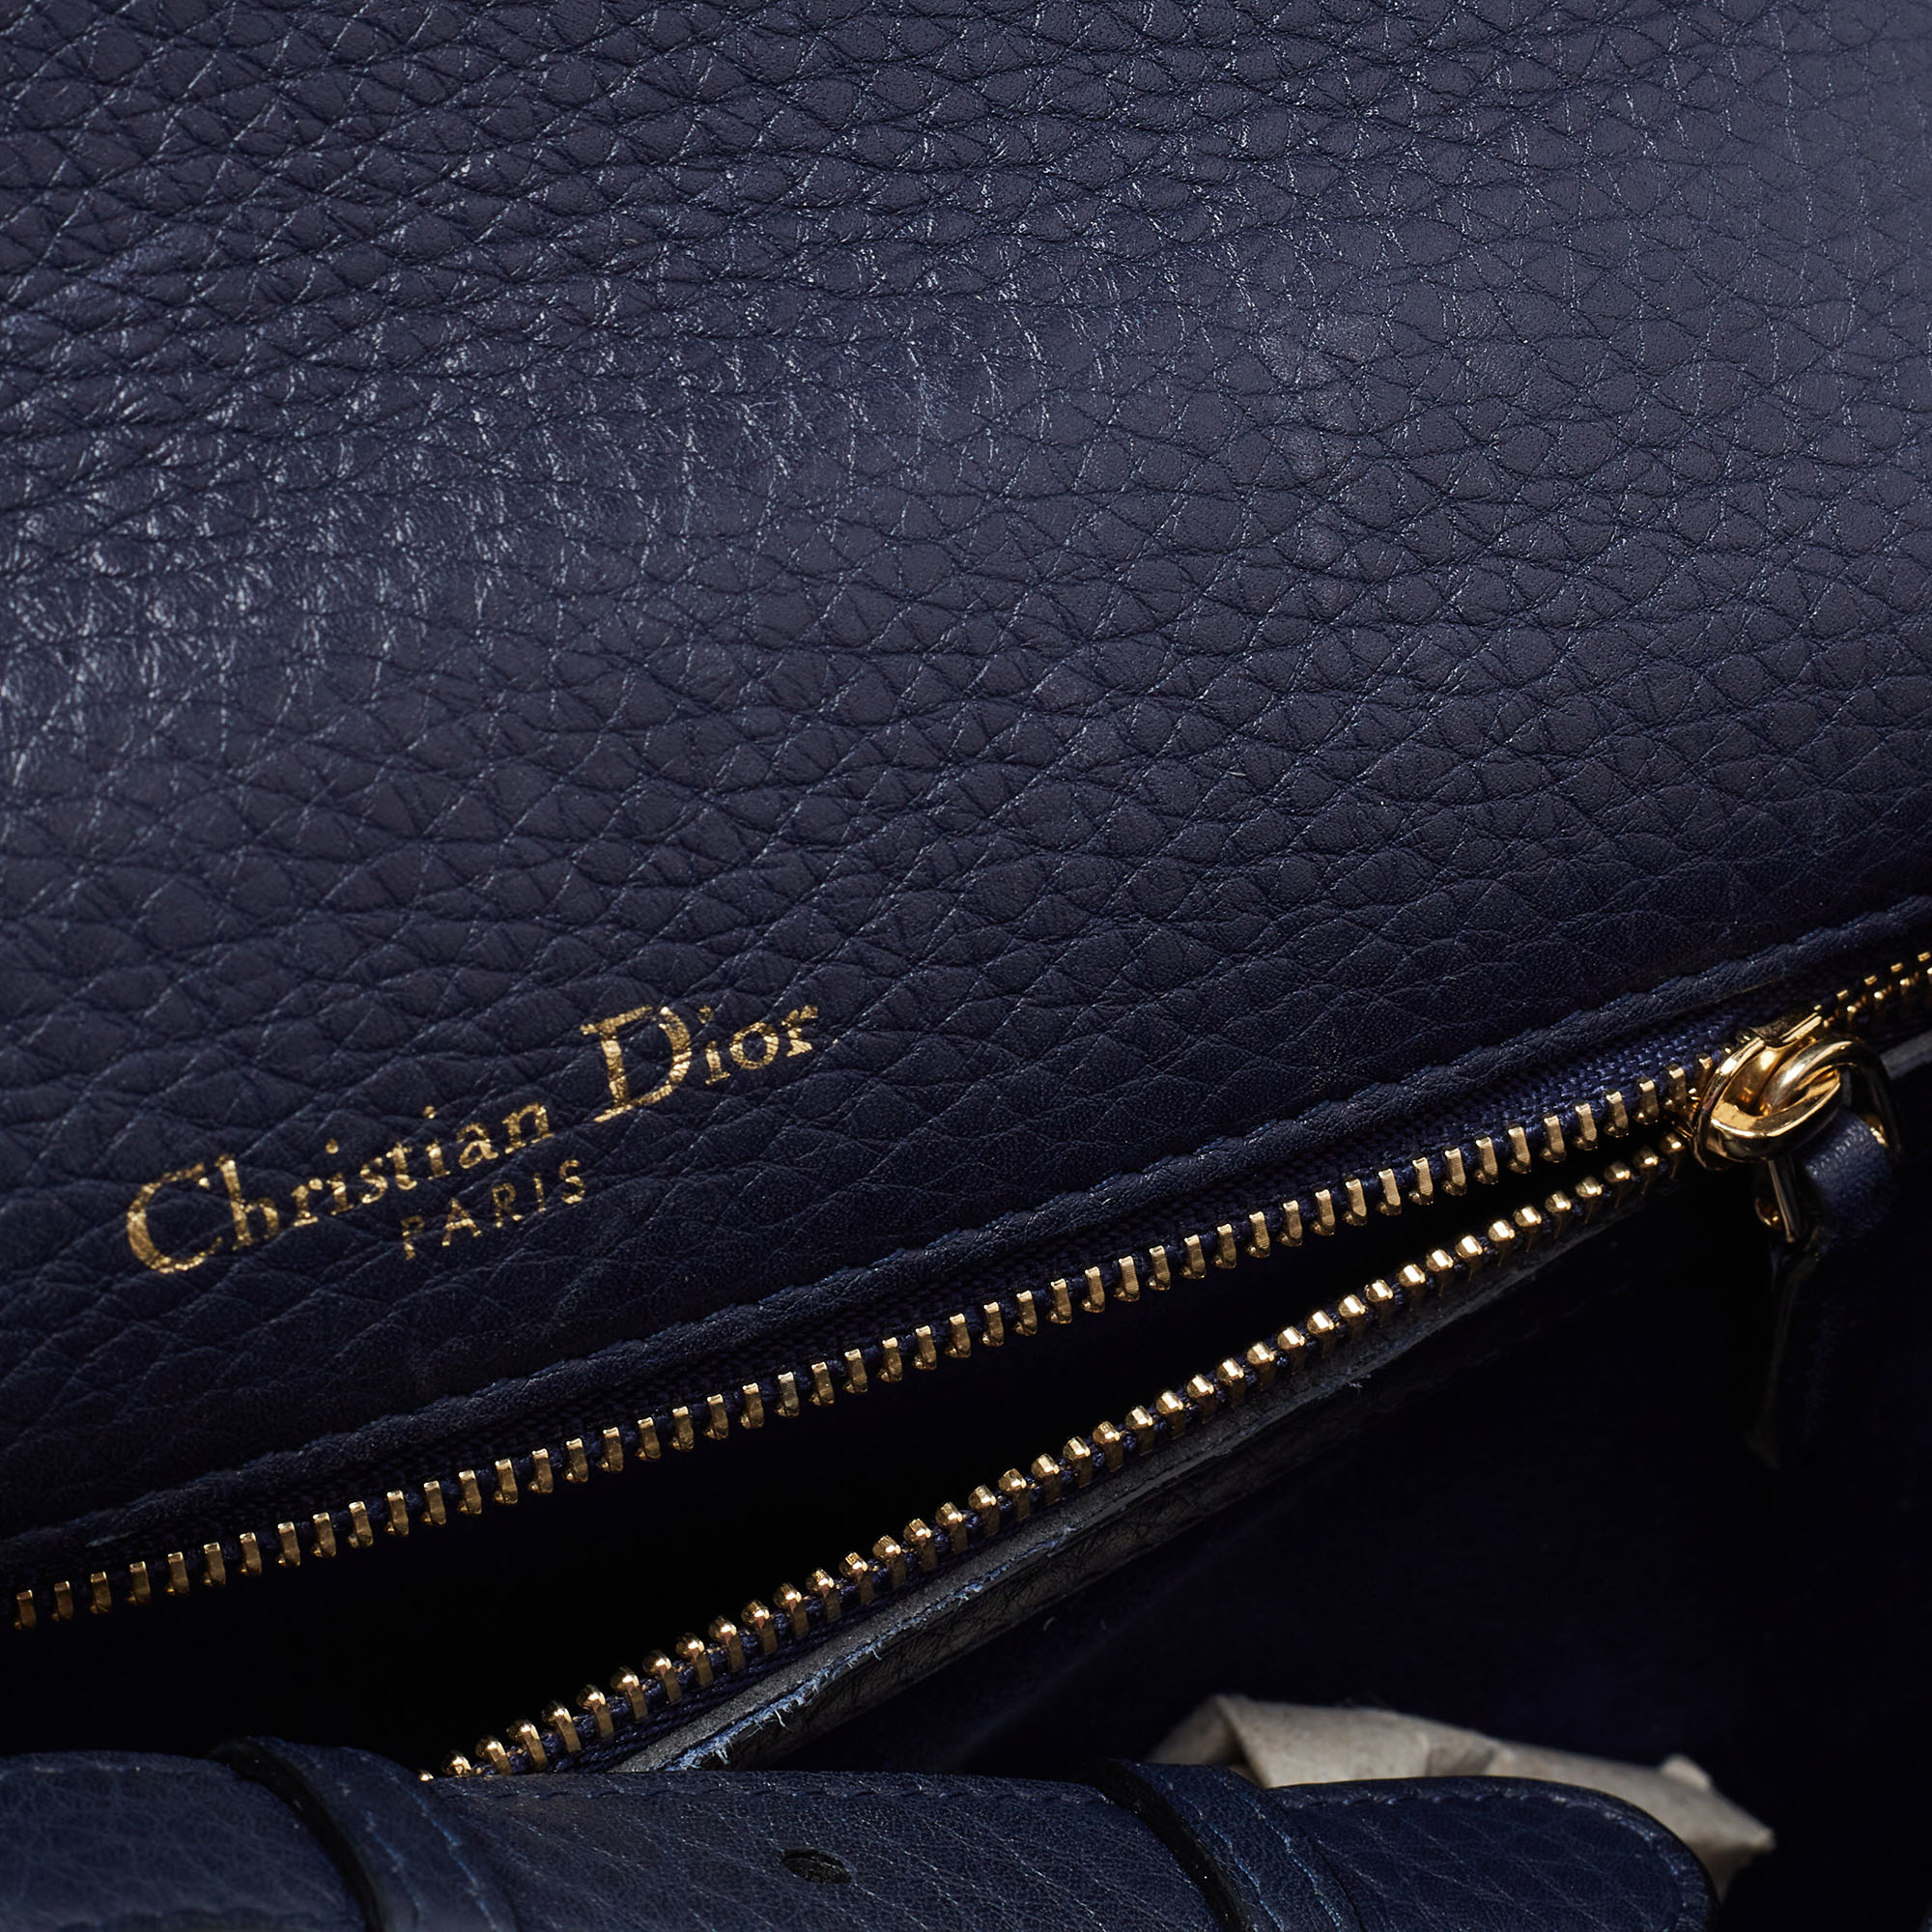 Dior Navy Blue Leather Medium Diorama Flap Shoulder Bag